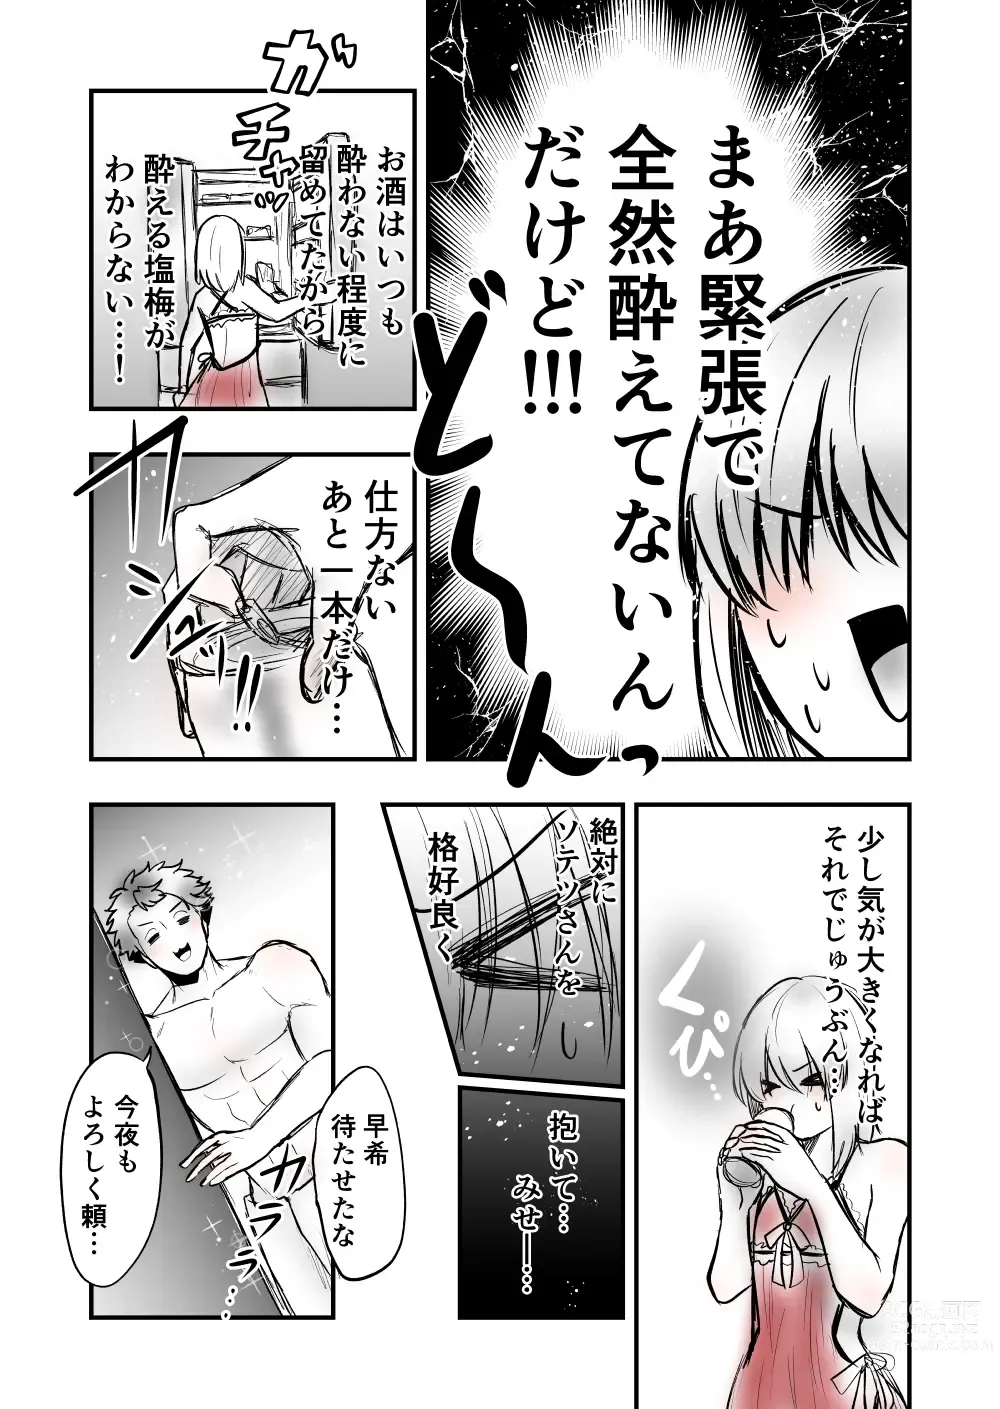 Page 6 of doujinshi 6